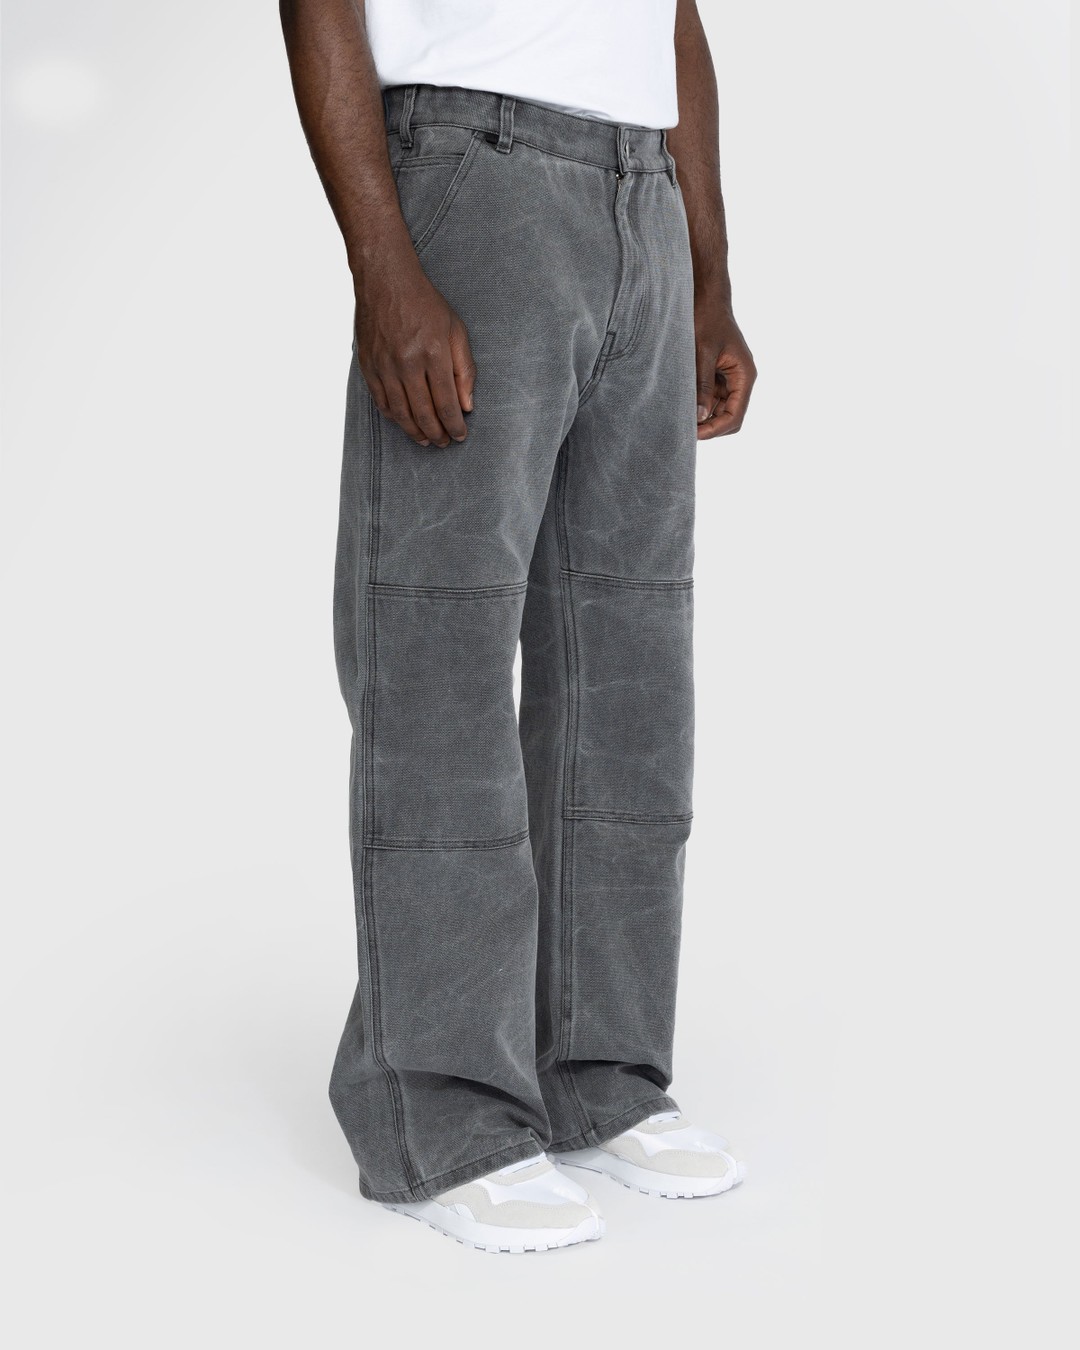 Acne Studios – Cotton Canvas Trousers Grey - Pants - Grey - Image 4